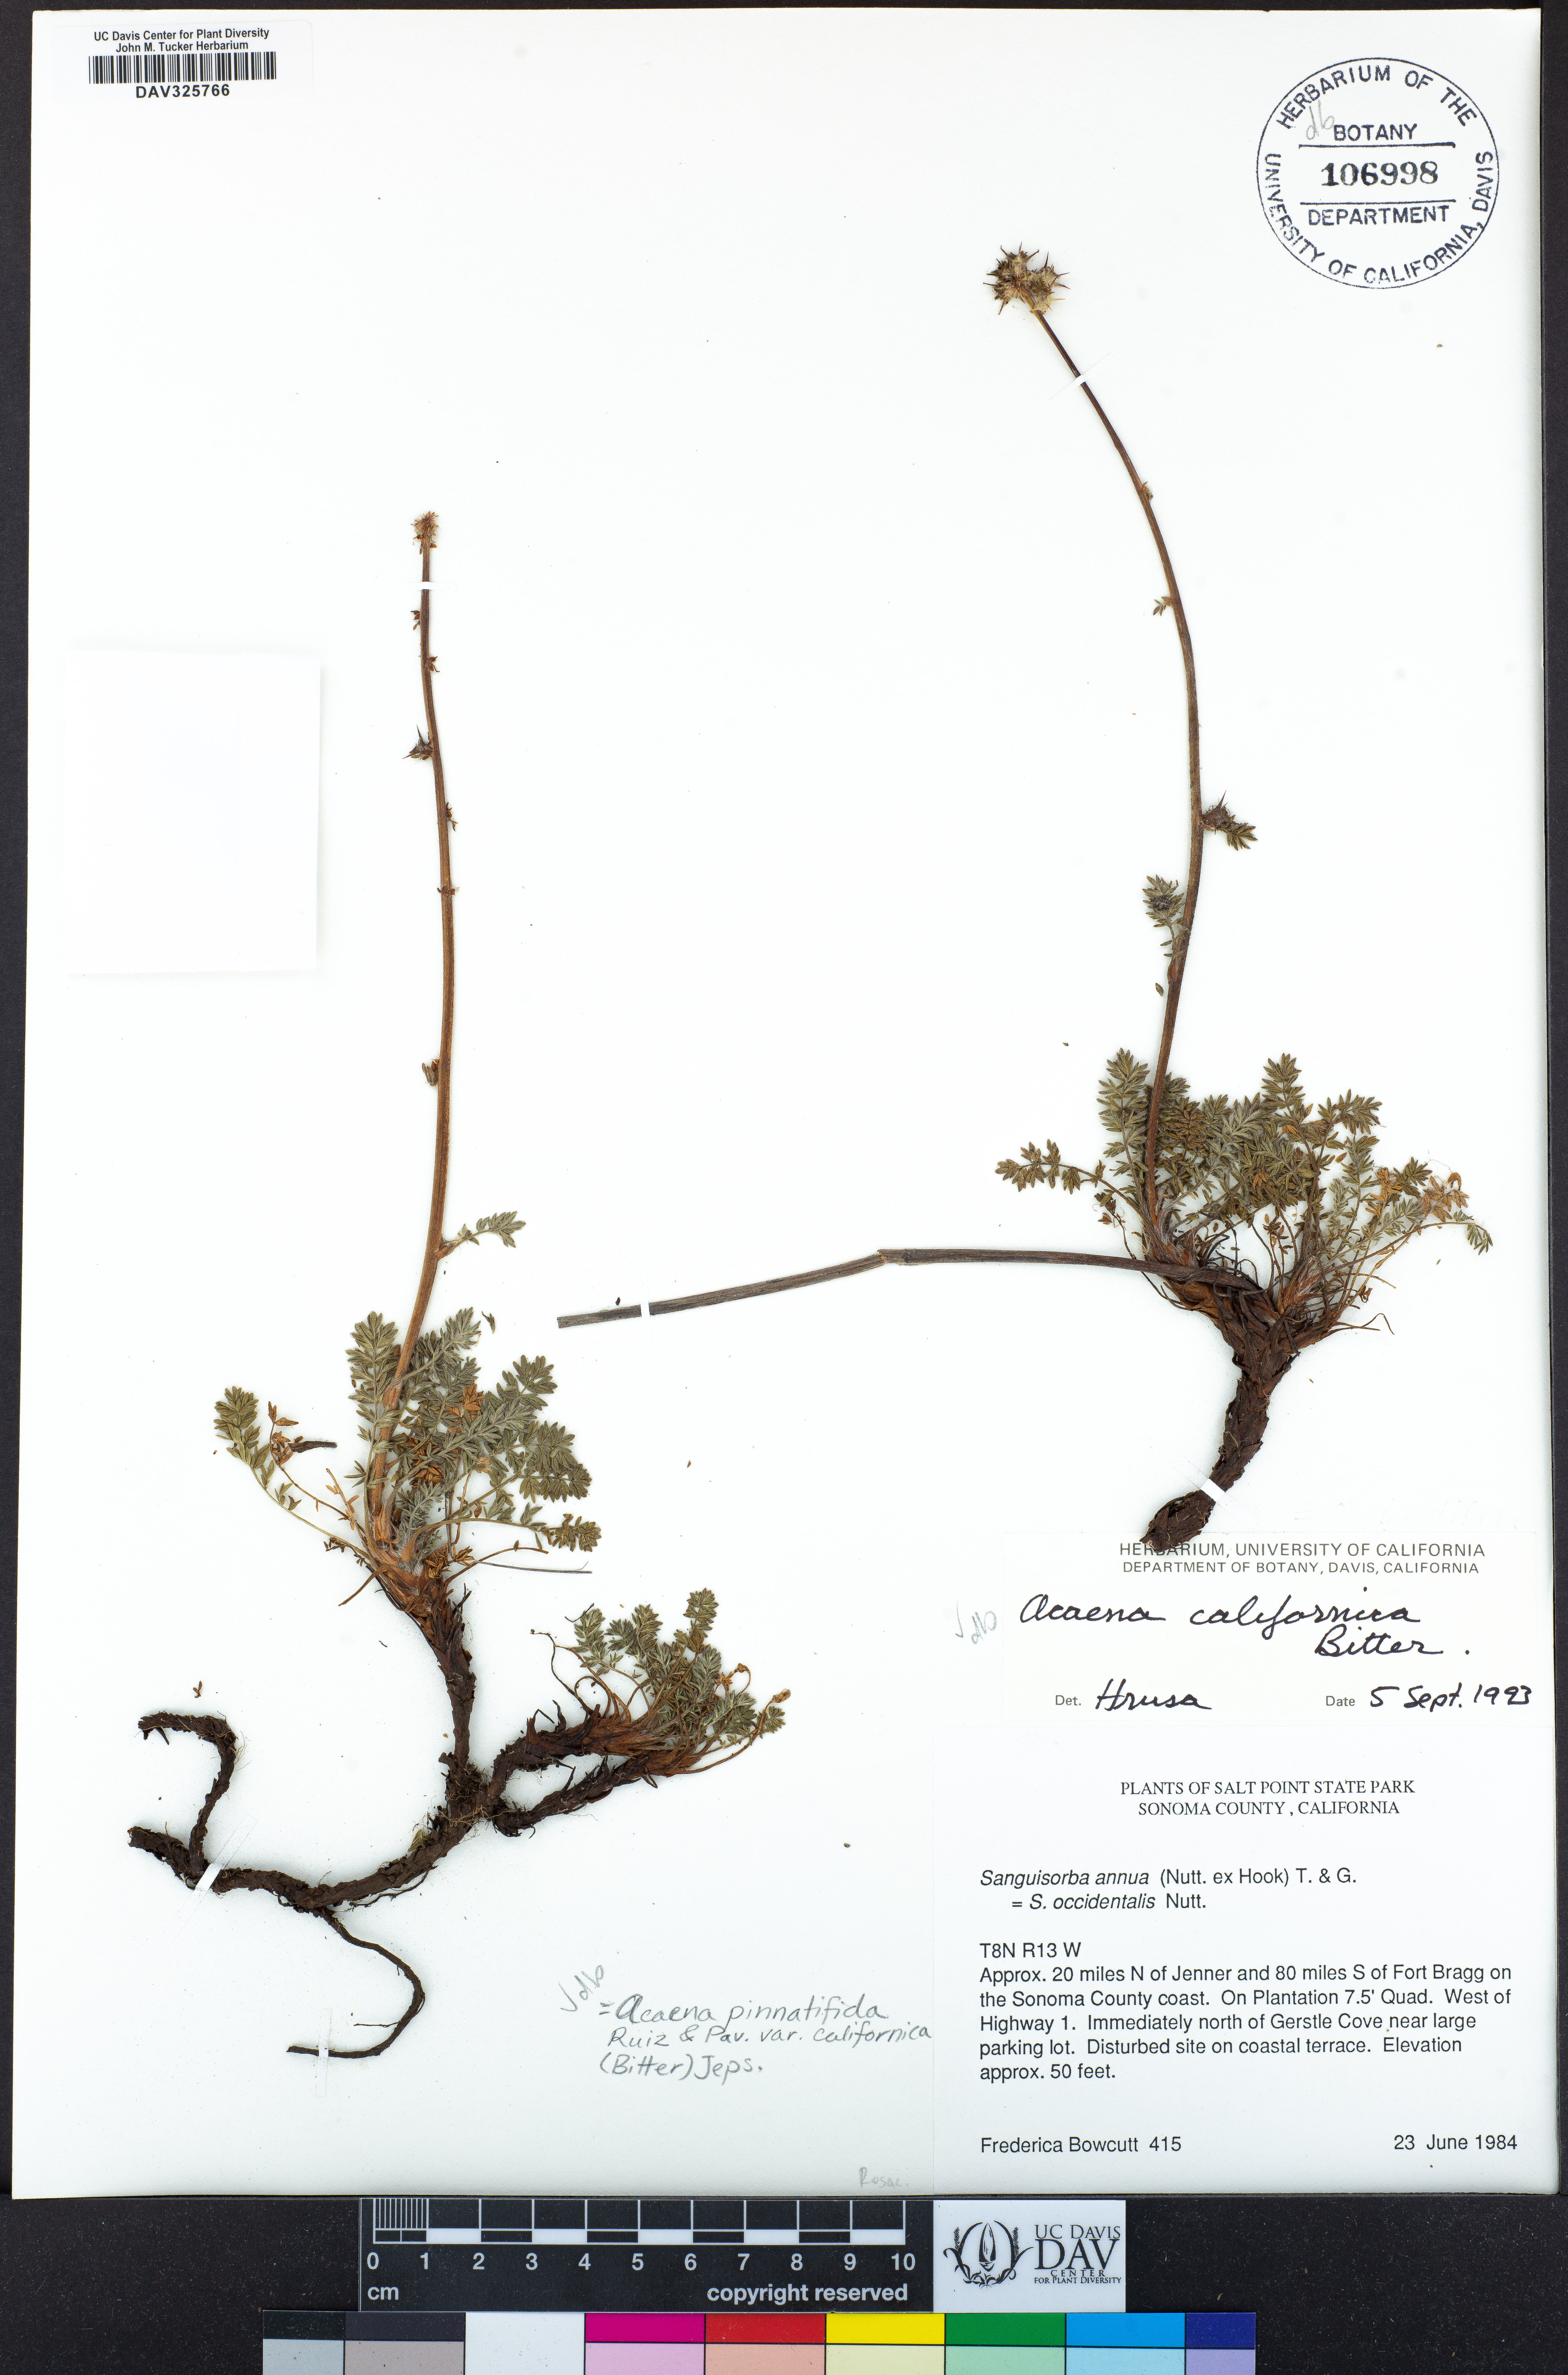 Acaena pinnatifida var. californica image